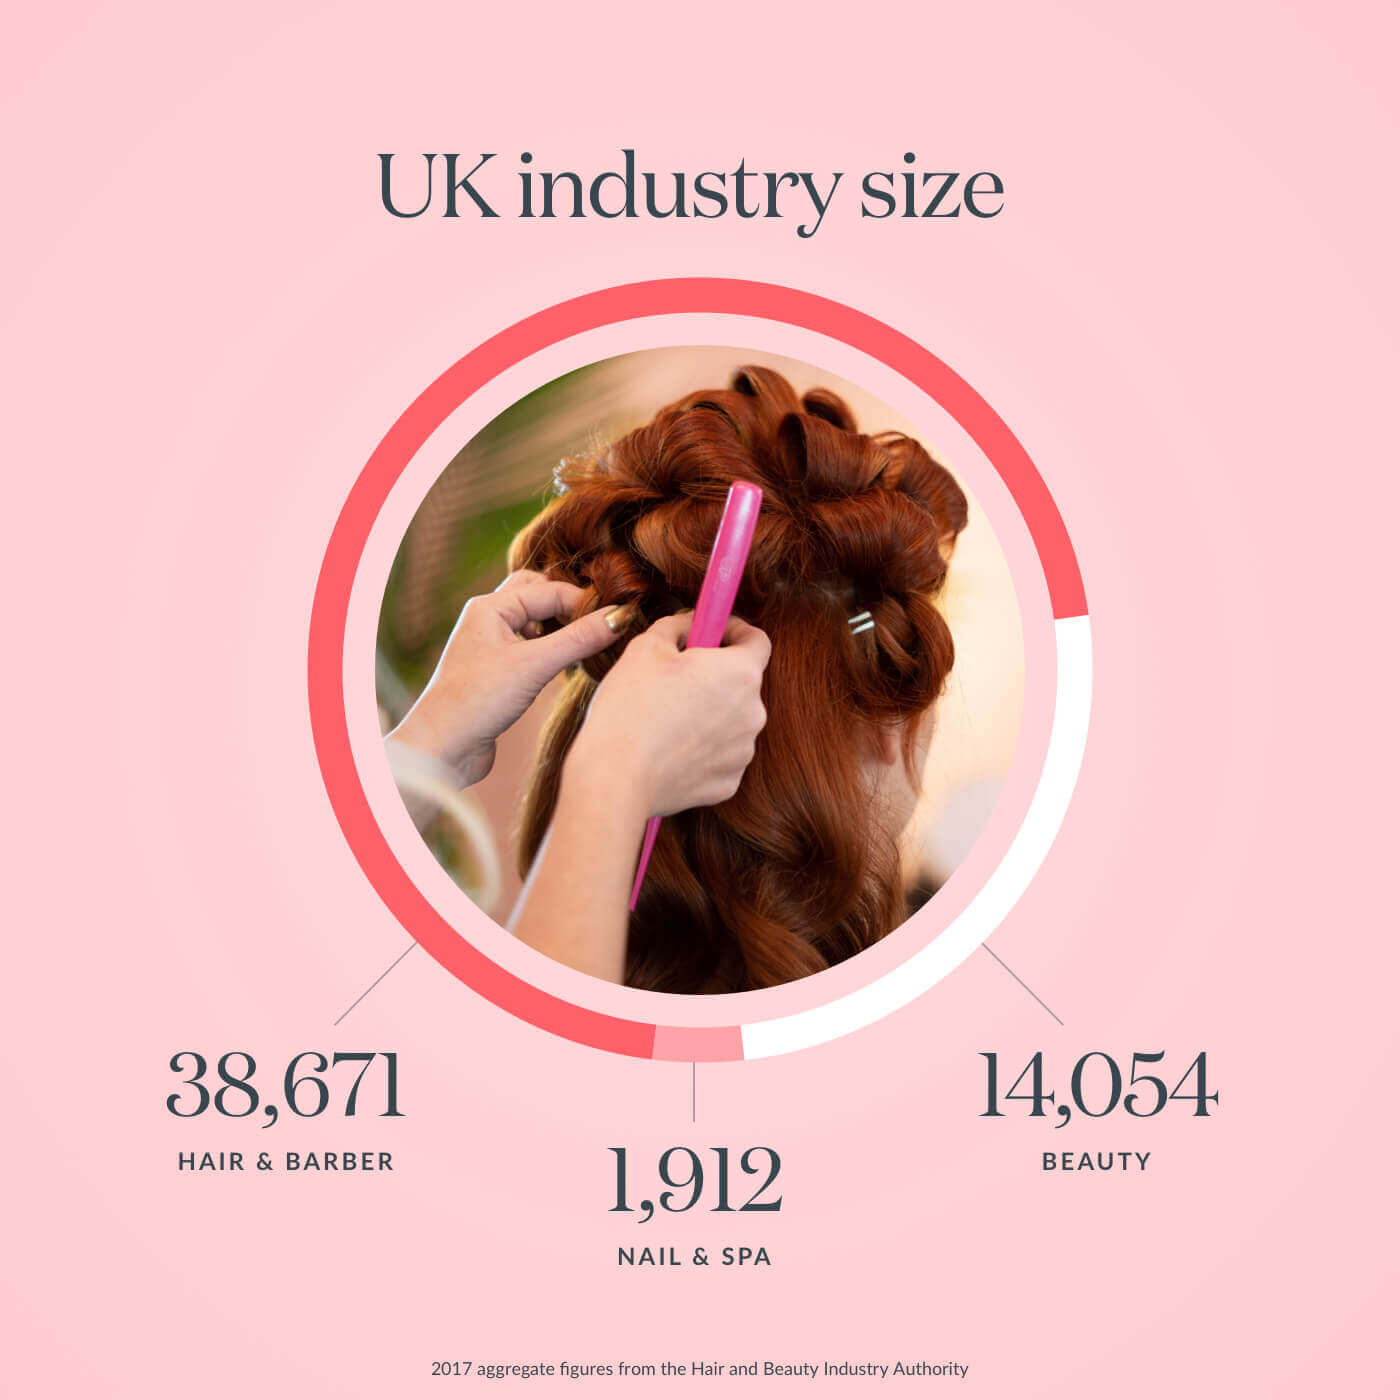 UK Industry size data